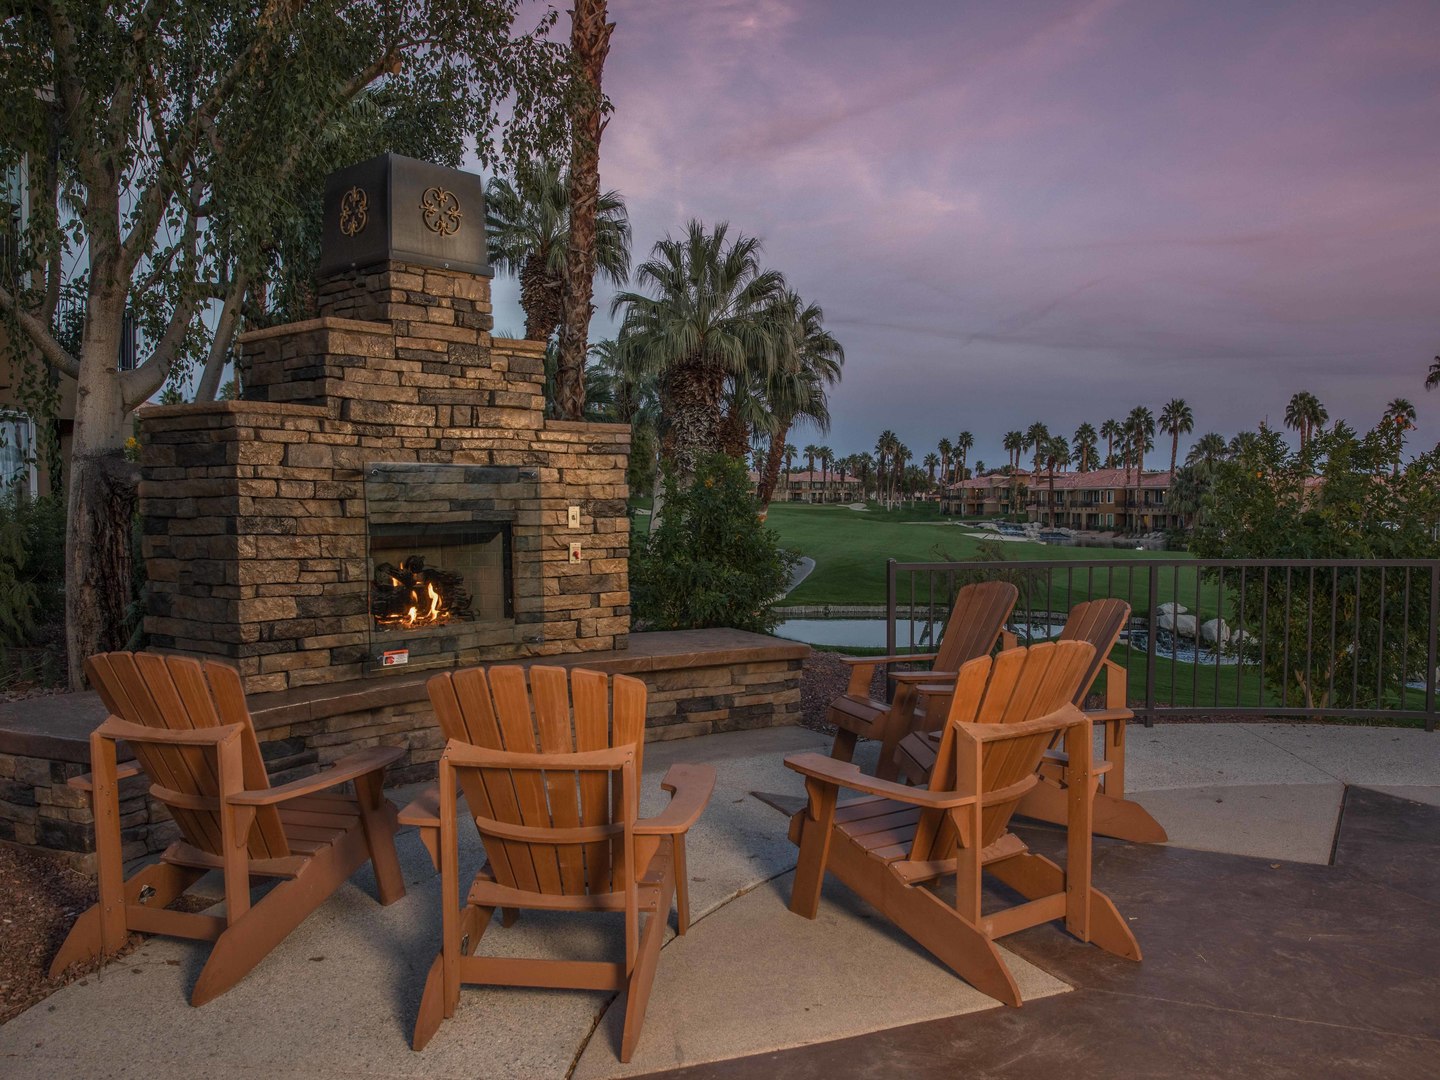 Marriott's Desert Springs Villas II Outdoor Fireplace/Lounge Area. Marriott's Desert Springs Villas II is located in Palm Desert, California United States.